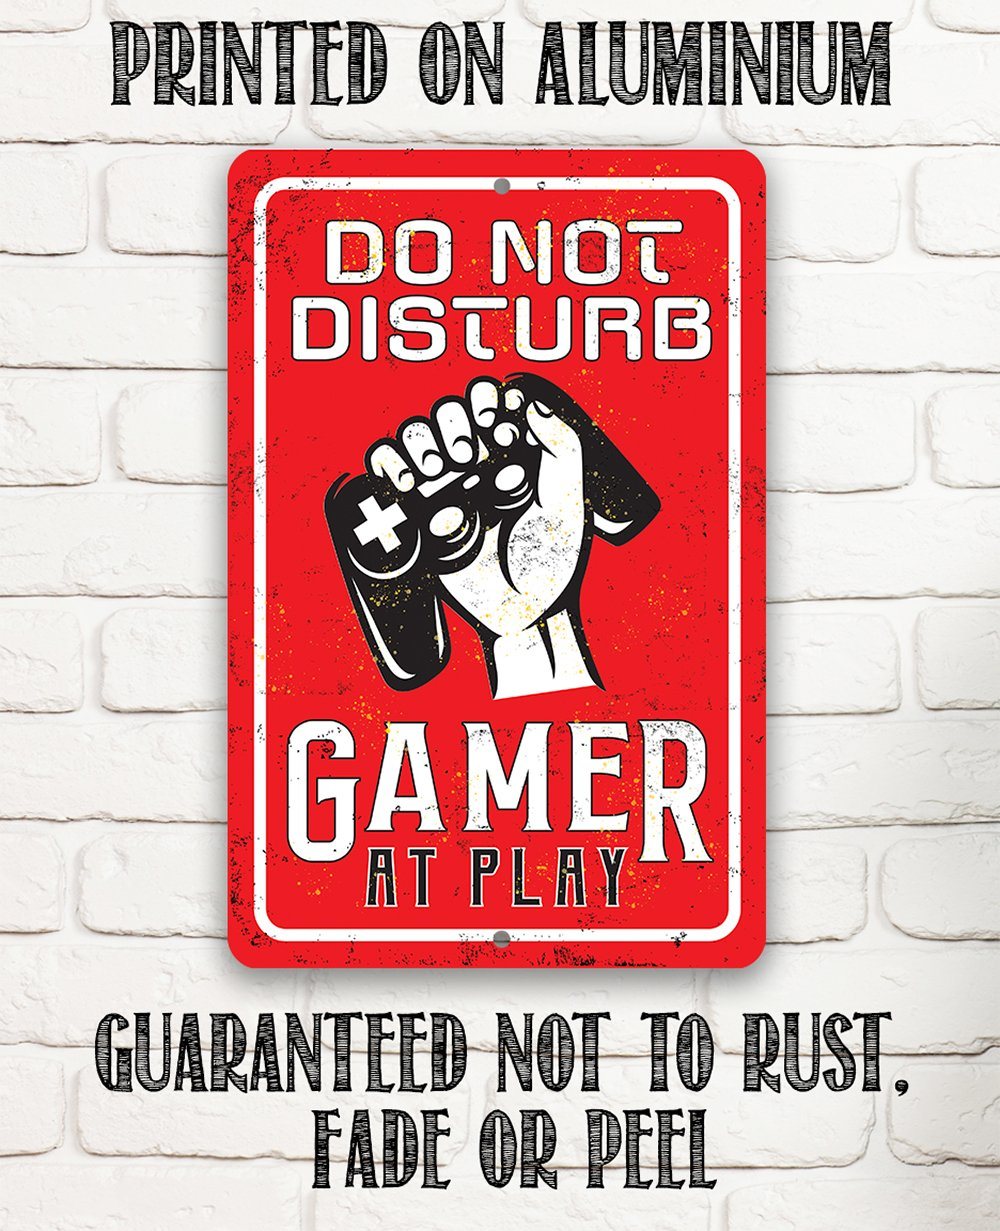 Danger Do Not Disturb Gamer- Metal Sign | Lone Star Art.